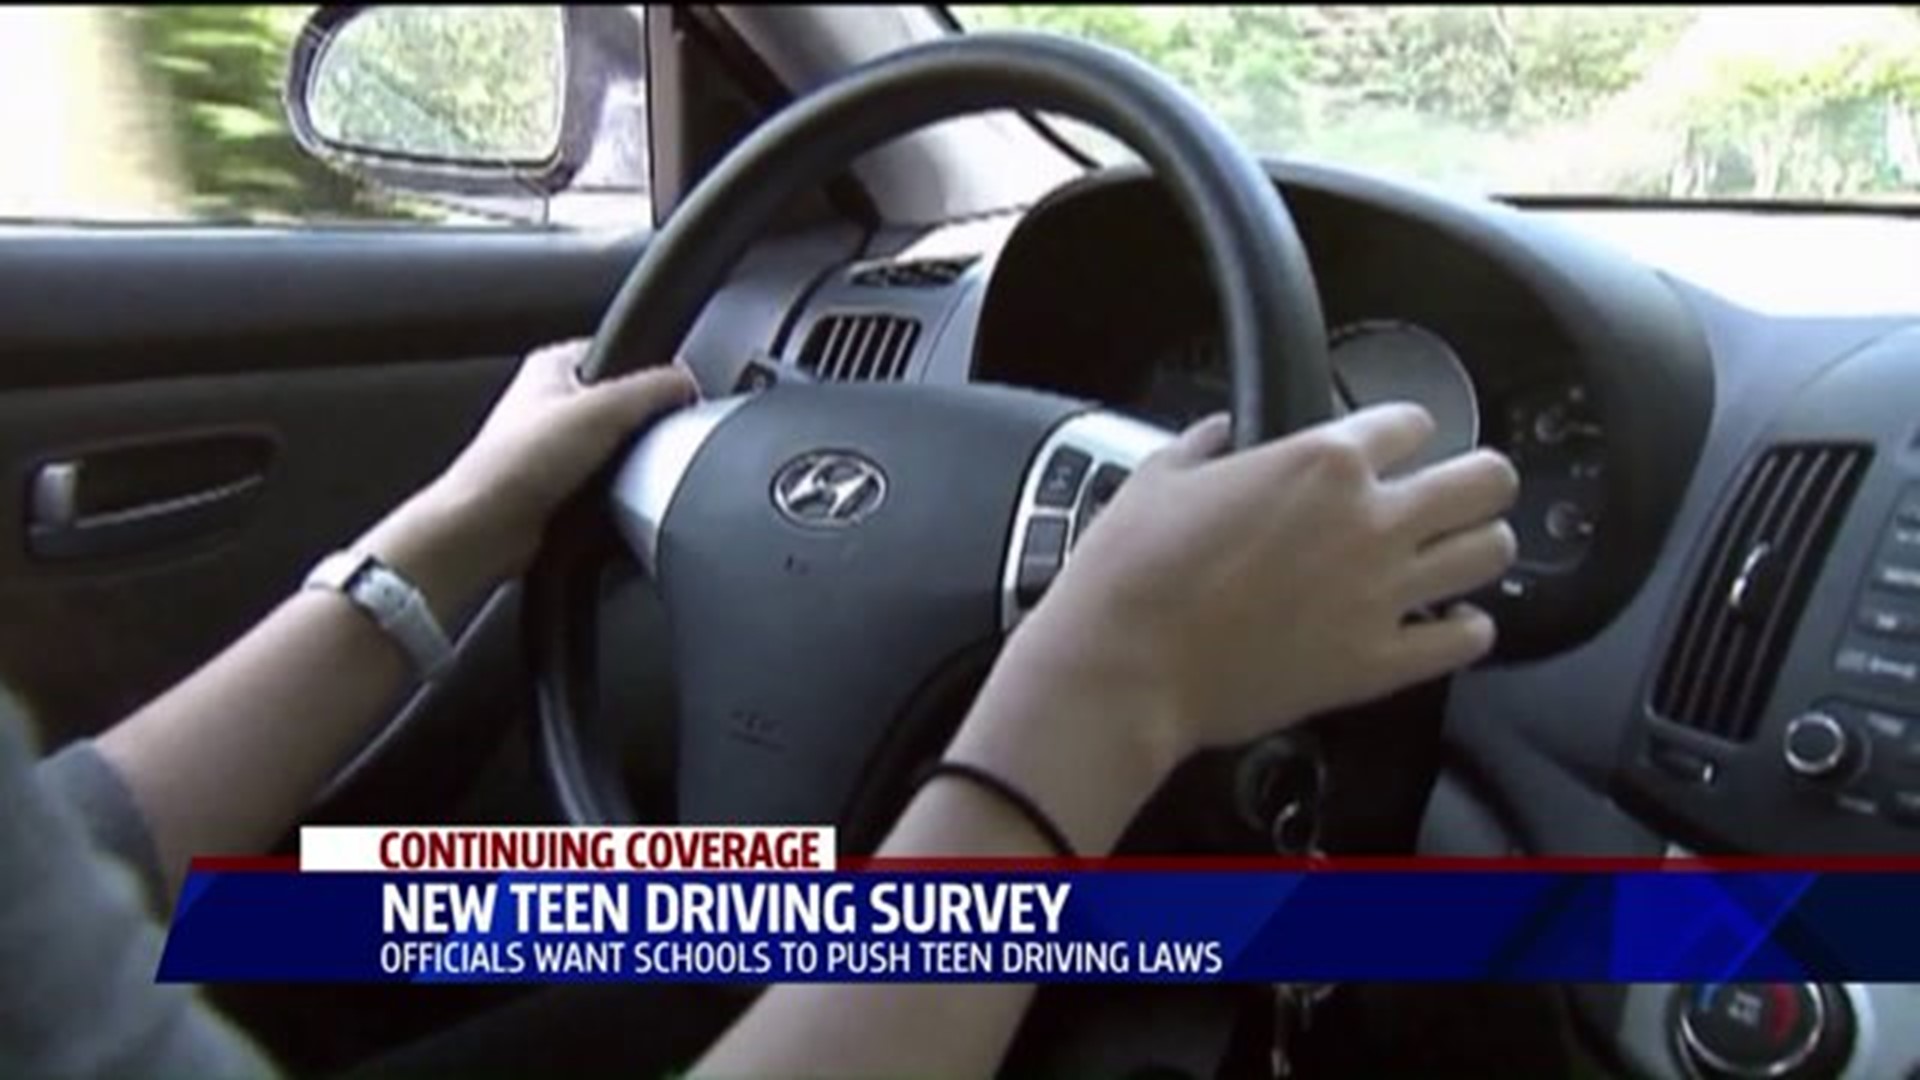 New teen driving survey